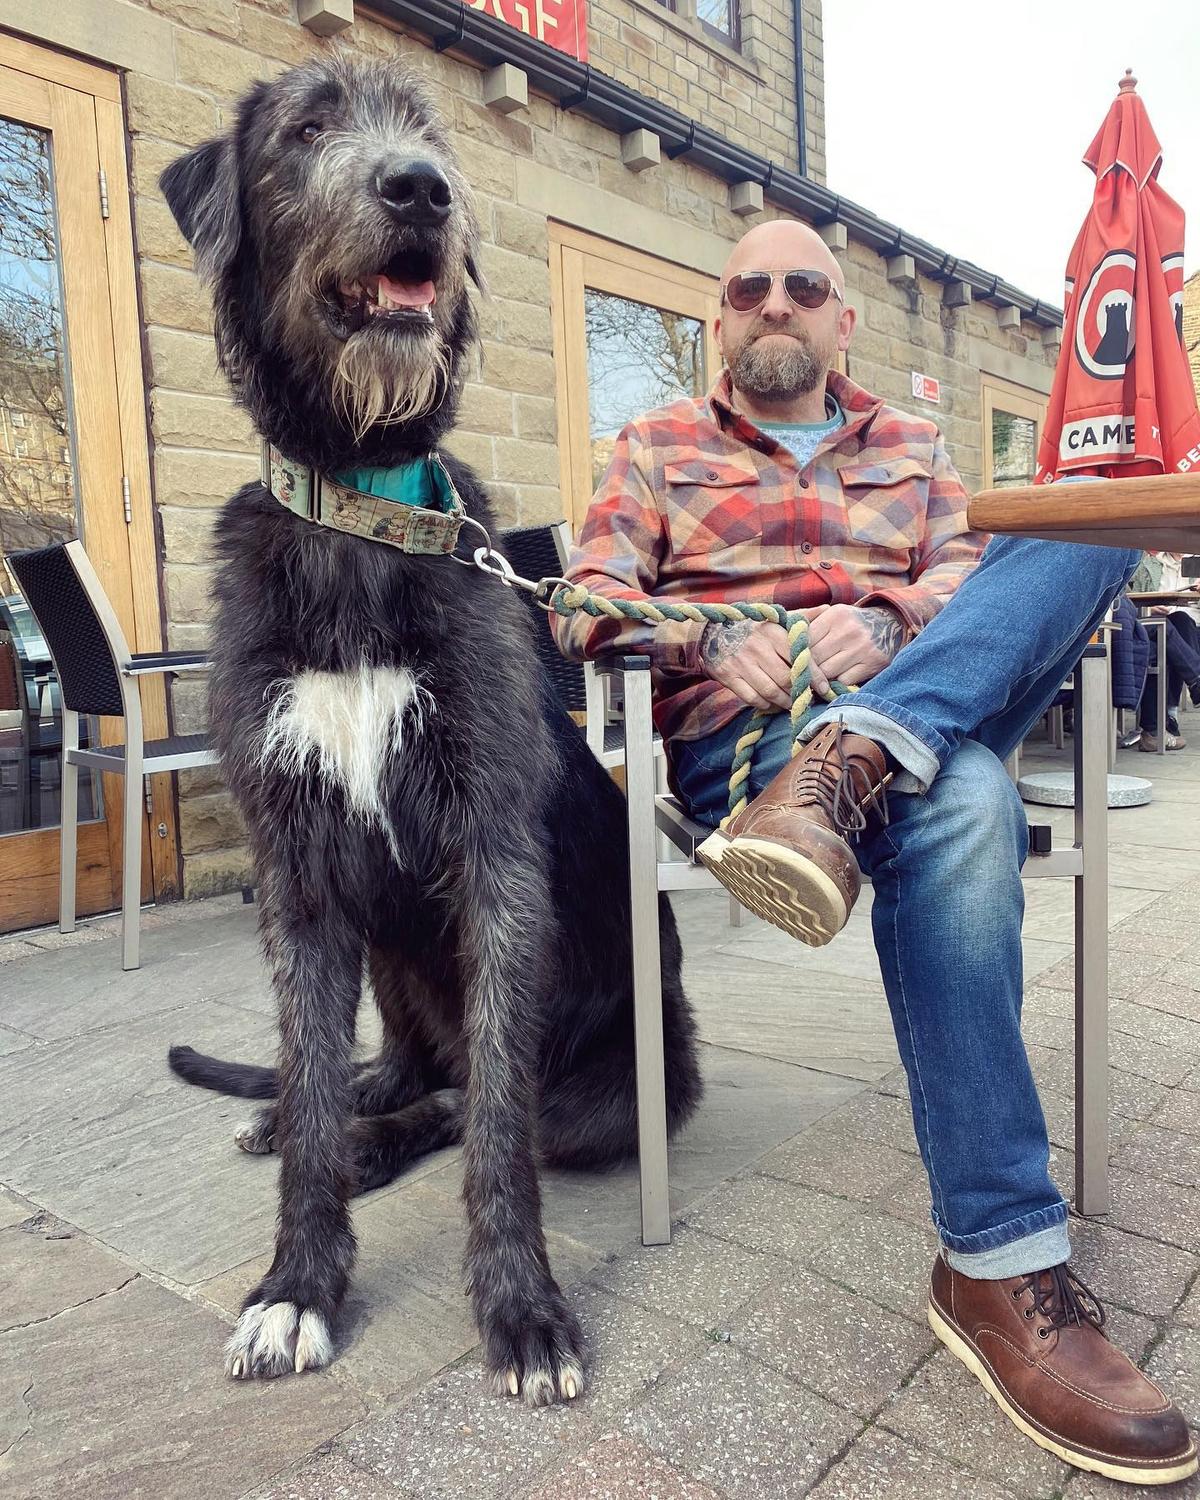 Mav with Wilson. (Courtesy of <a href="https://www.instagram.com/austonley_irish_wolfhounds/">Austonley Irish Wolfhounds</a>)